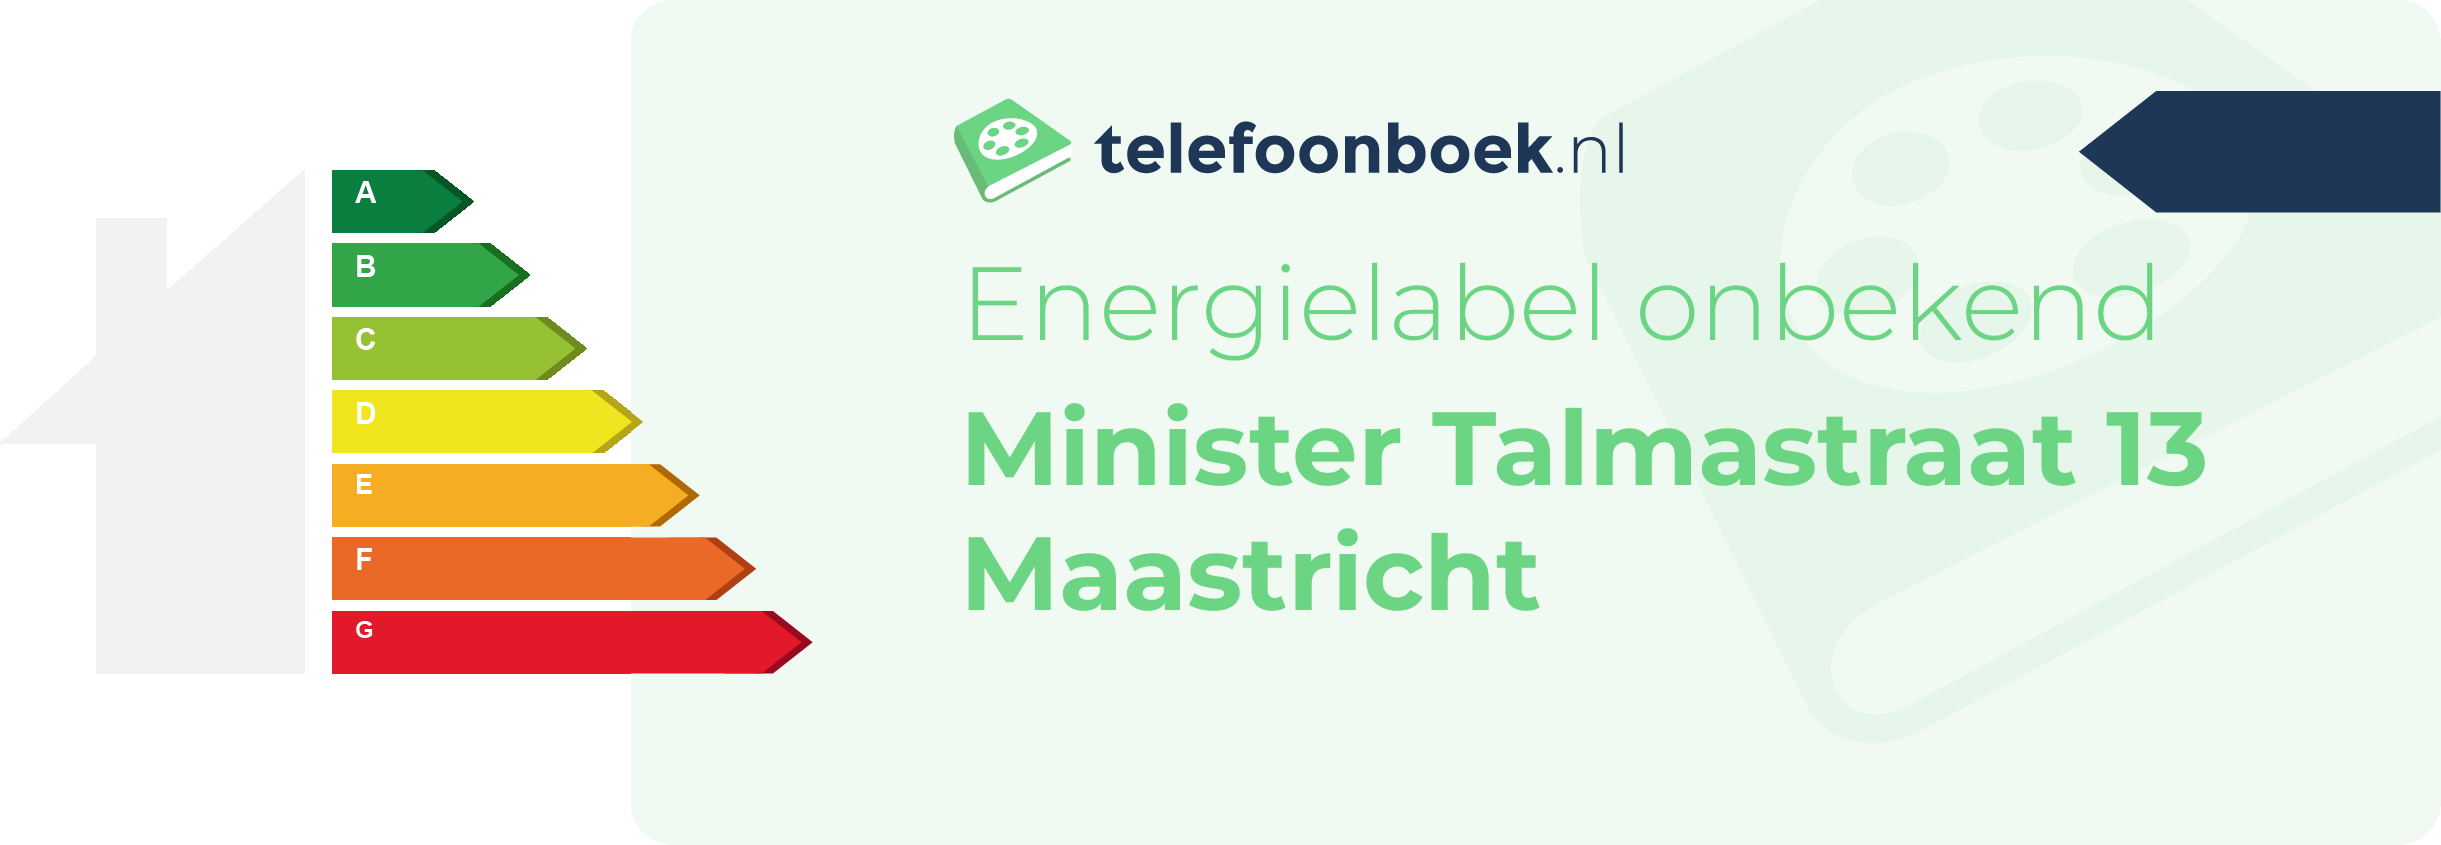 Energielabel Minister Talmastraat 13 Maastricht